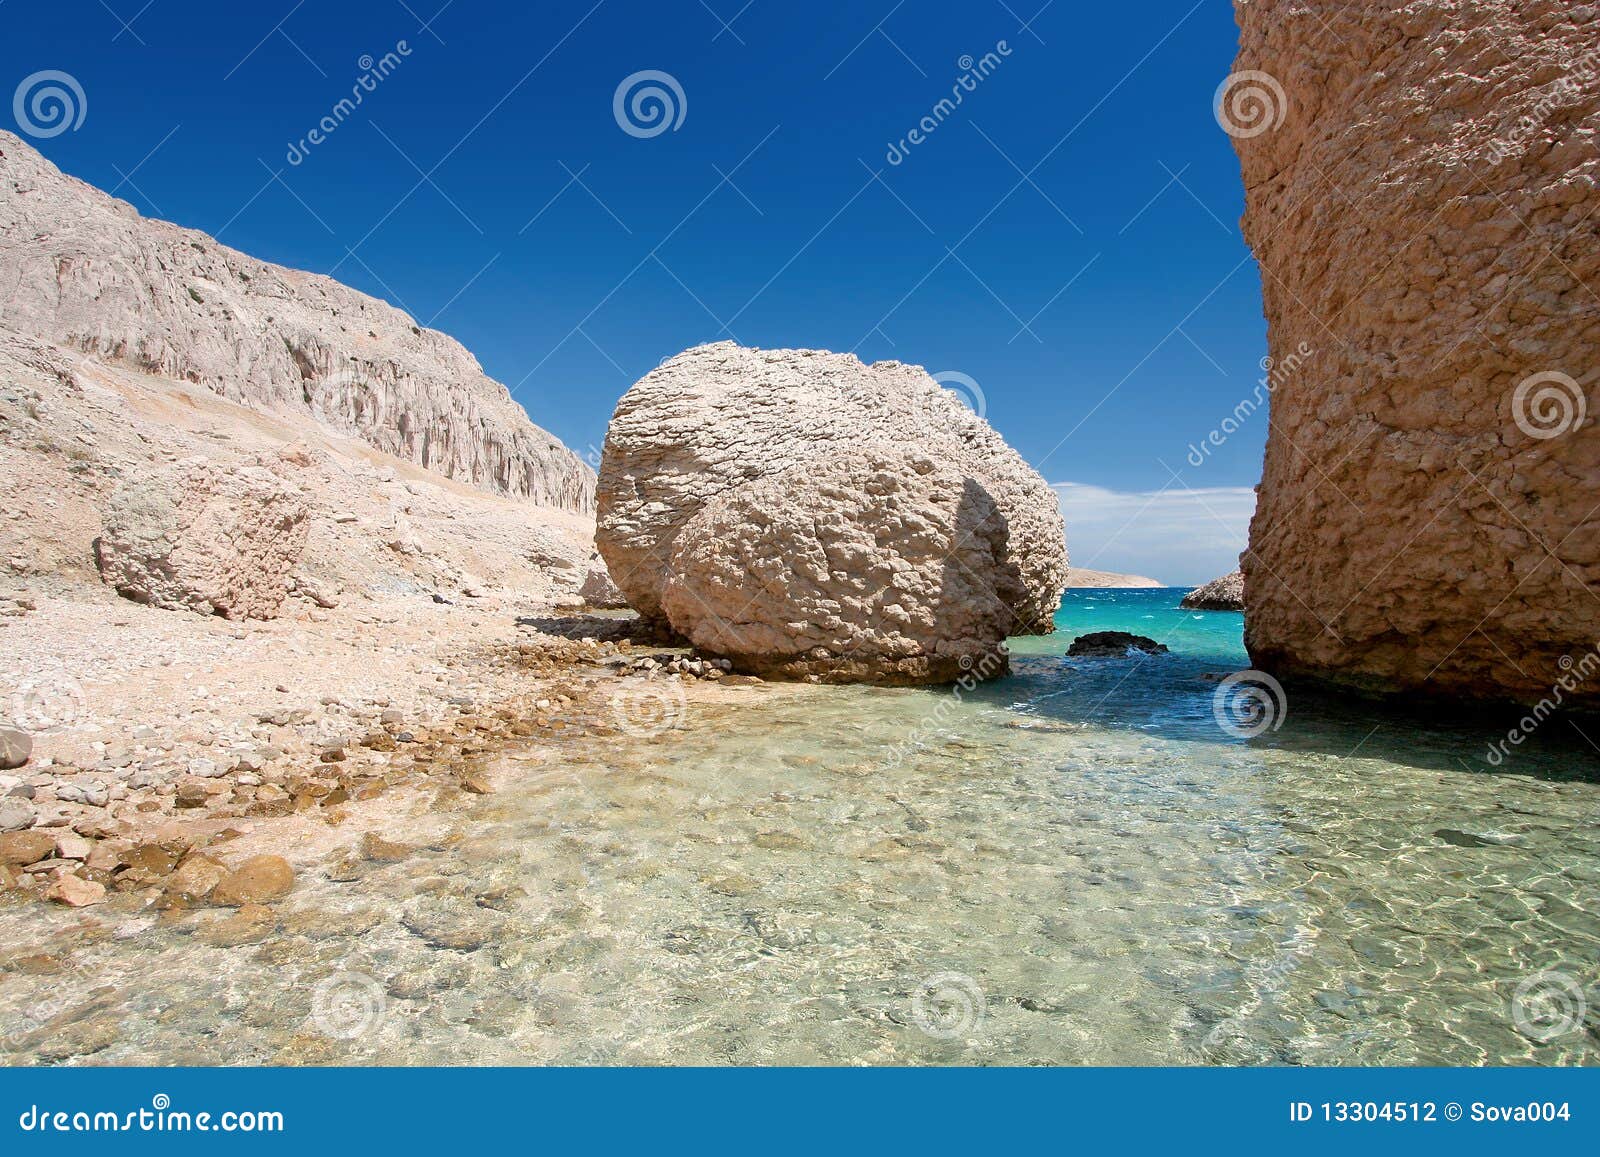 stony beach on island pag croatia